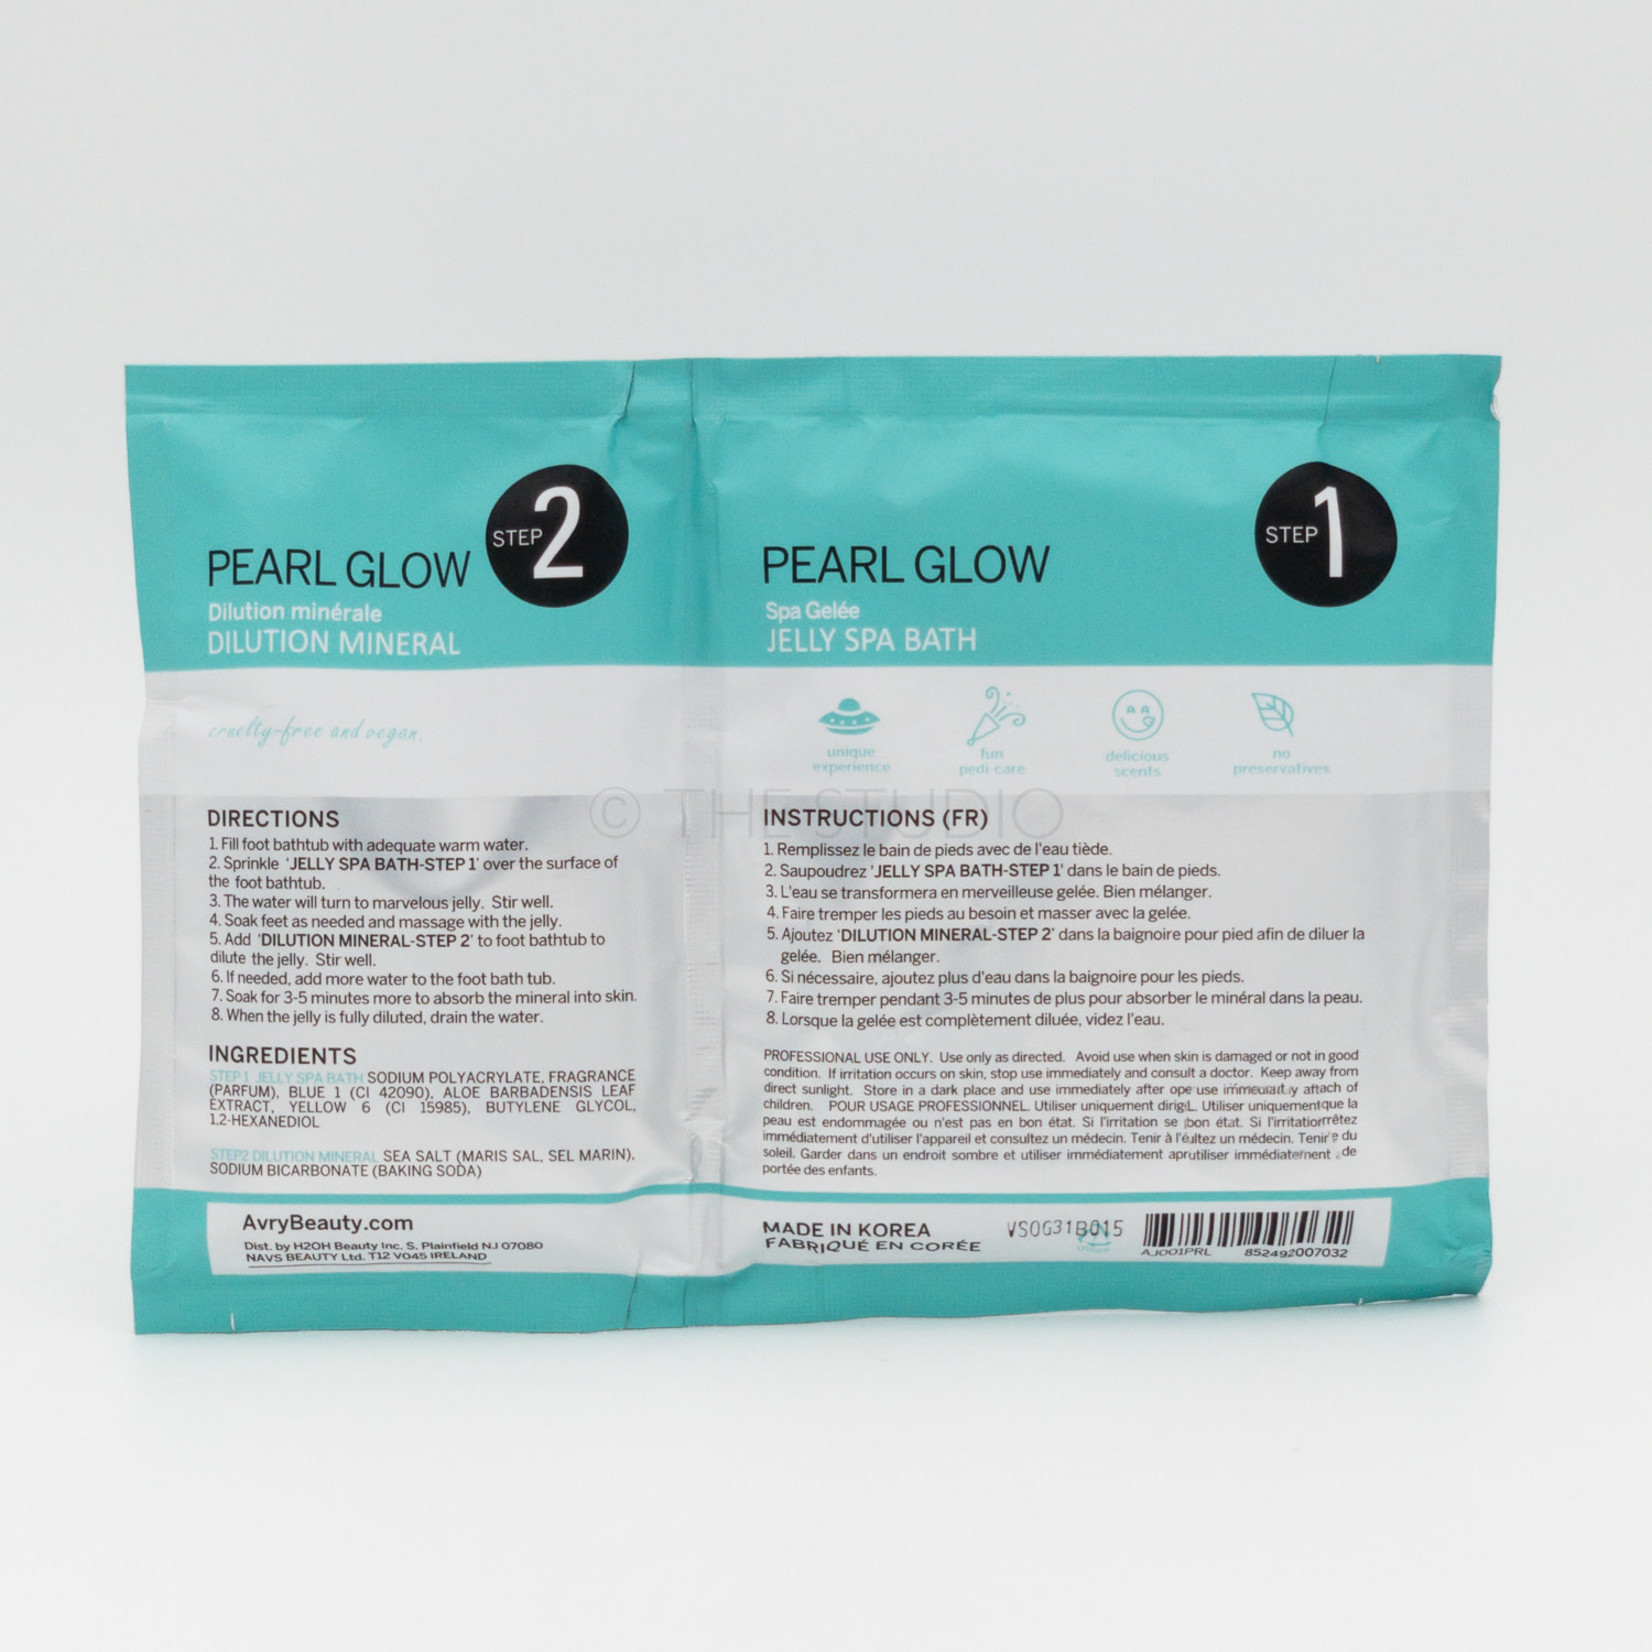 Gel-Ohh! - Jelly Spa Bath - Pearl Glow - 1 ct